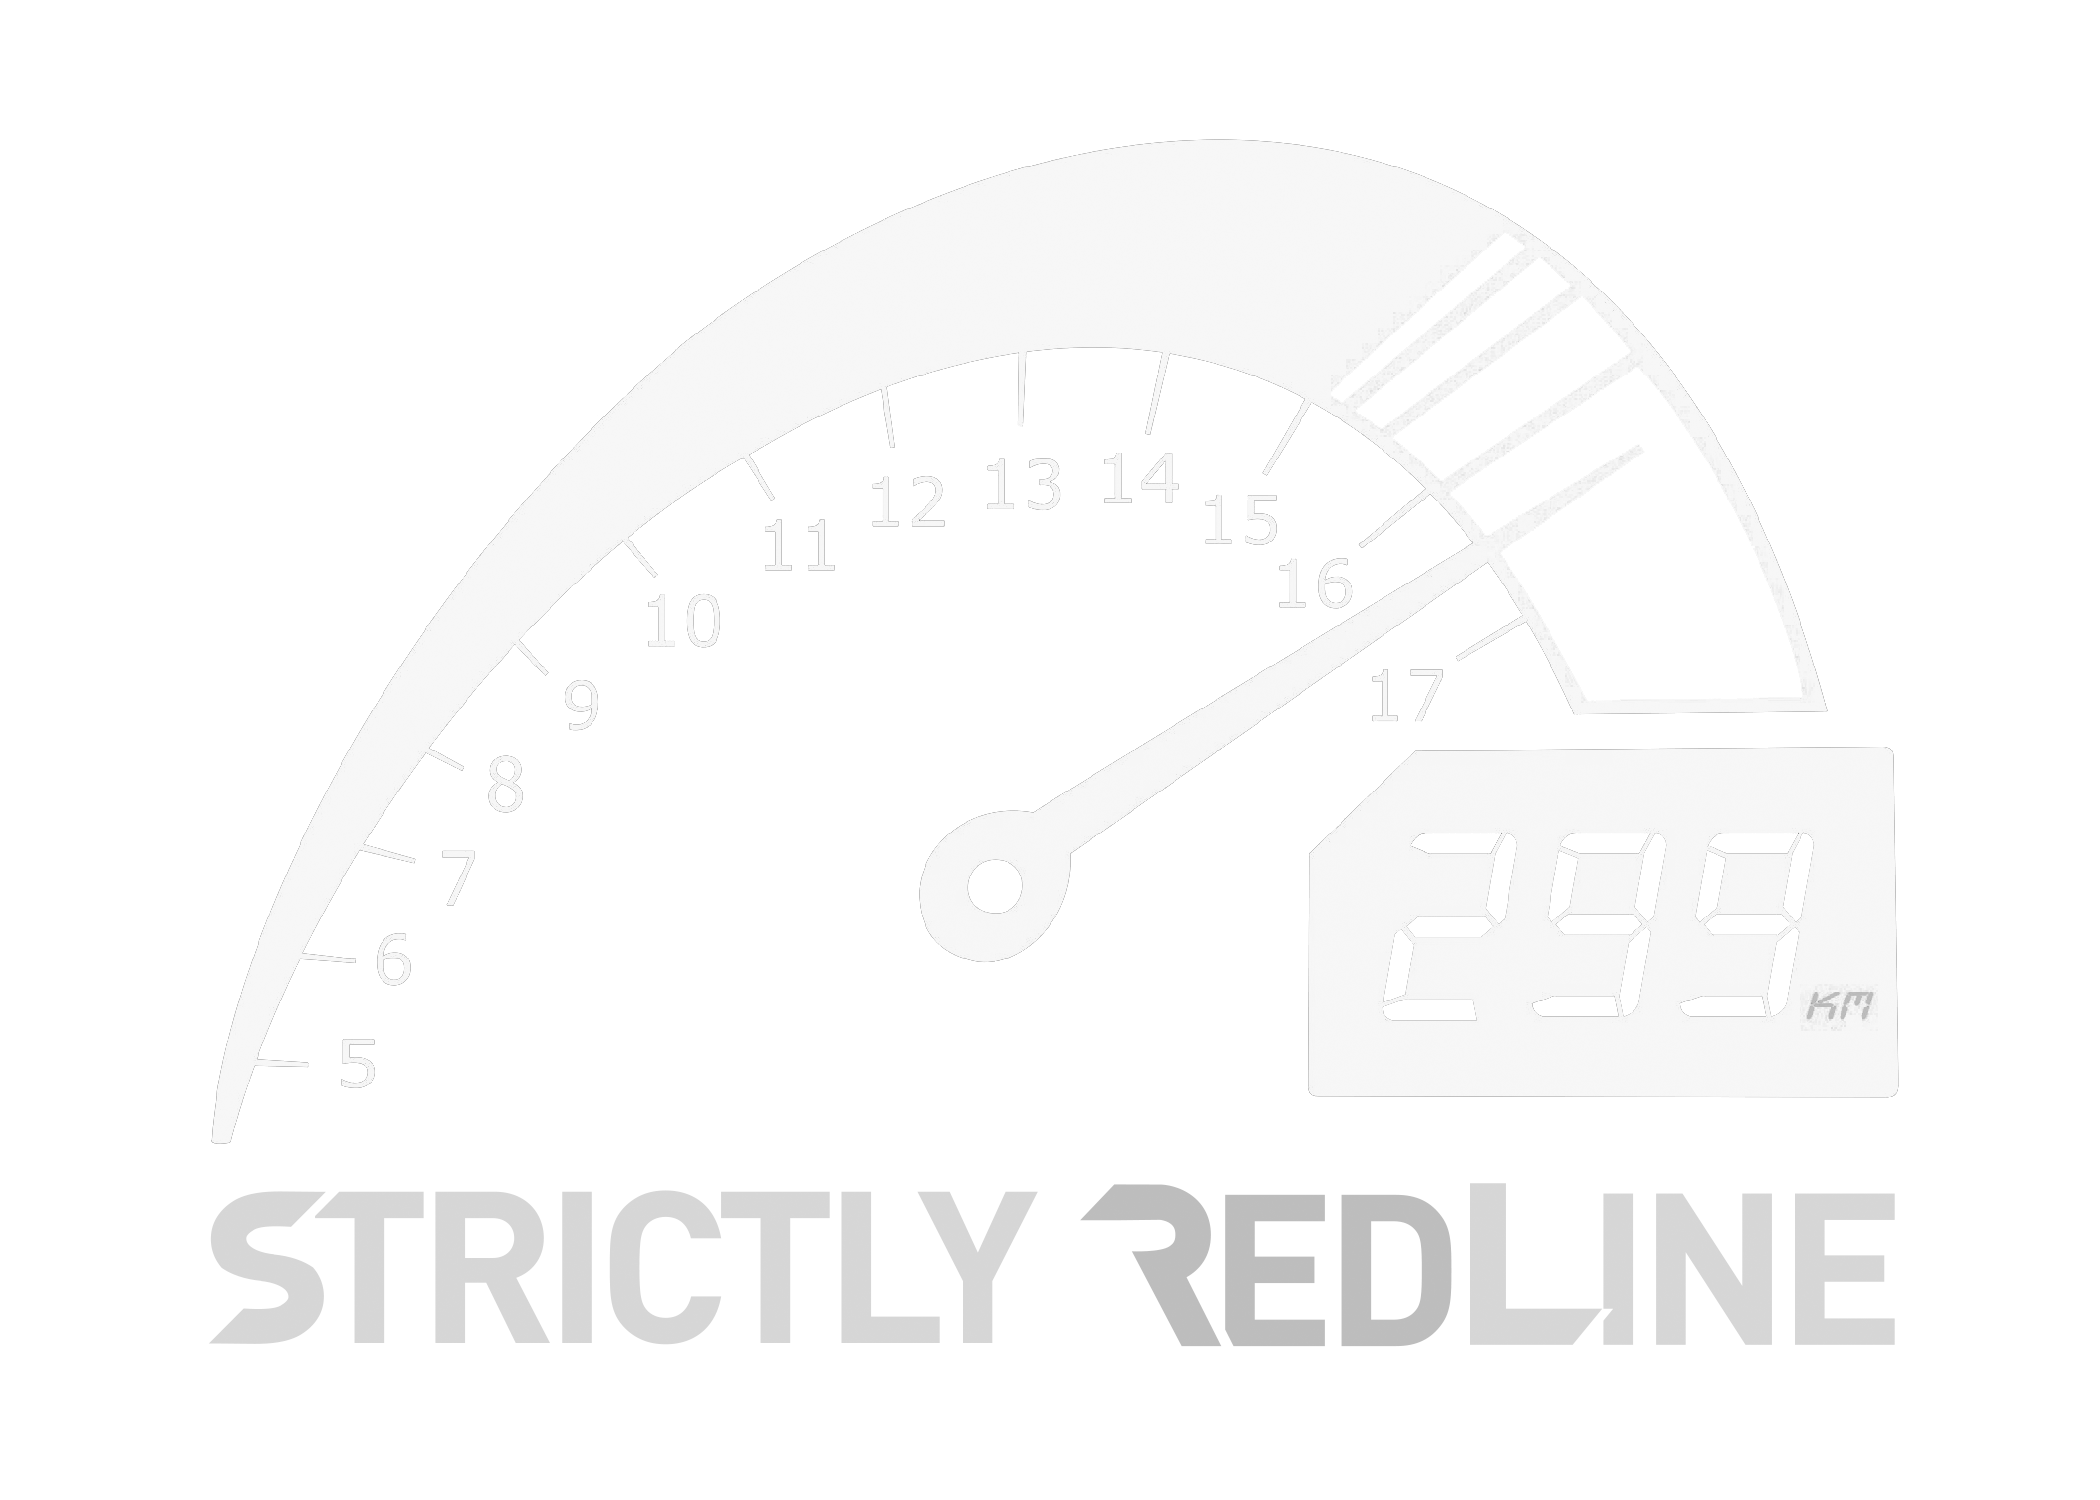 Strictly Redline